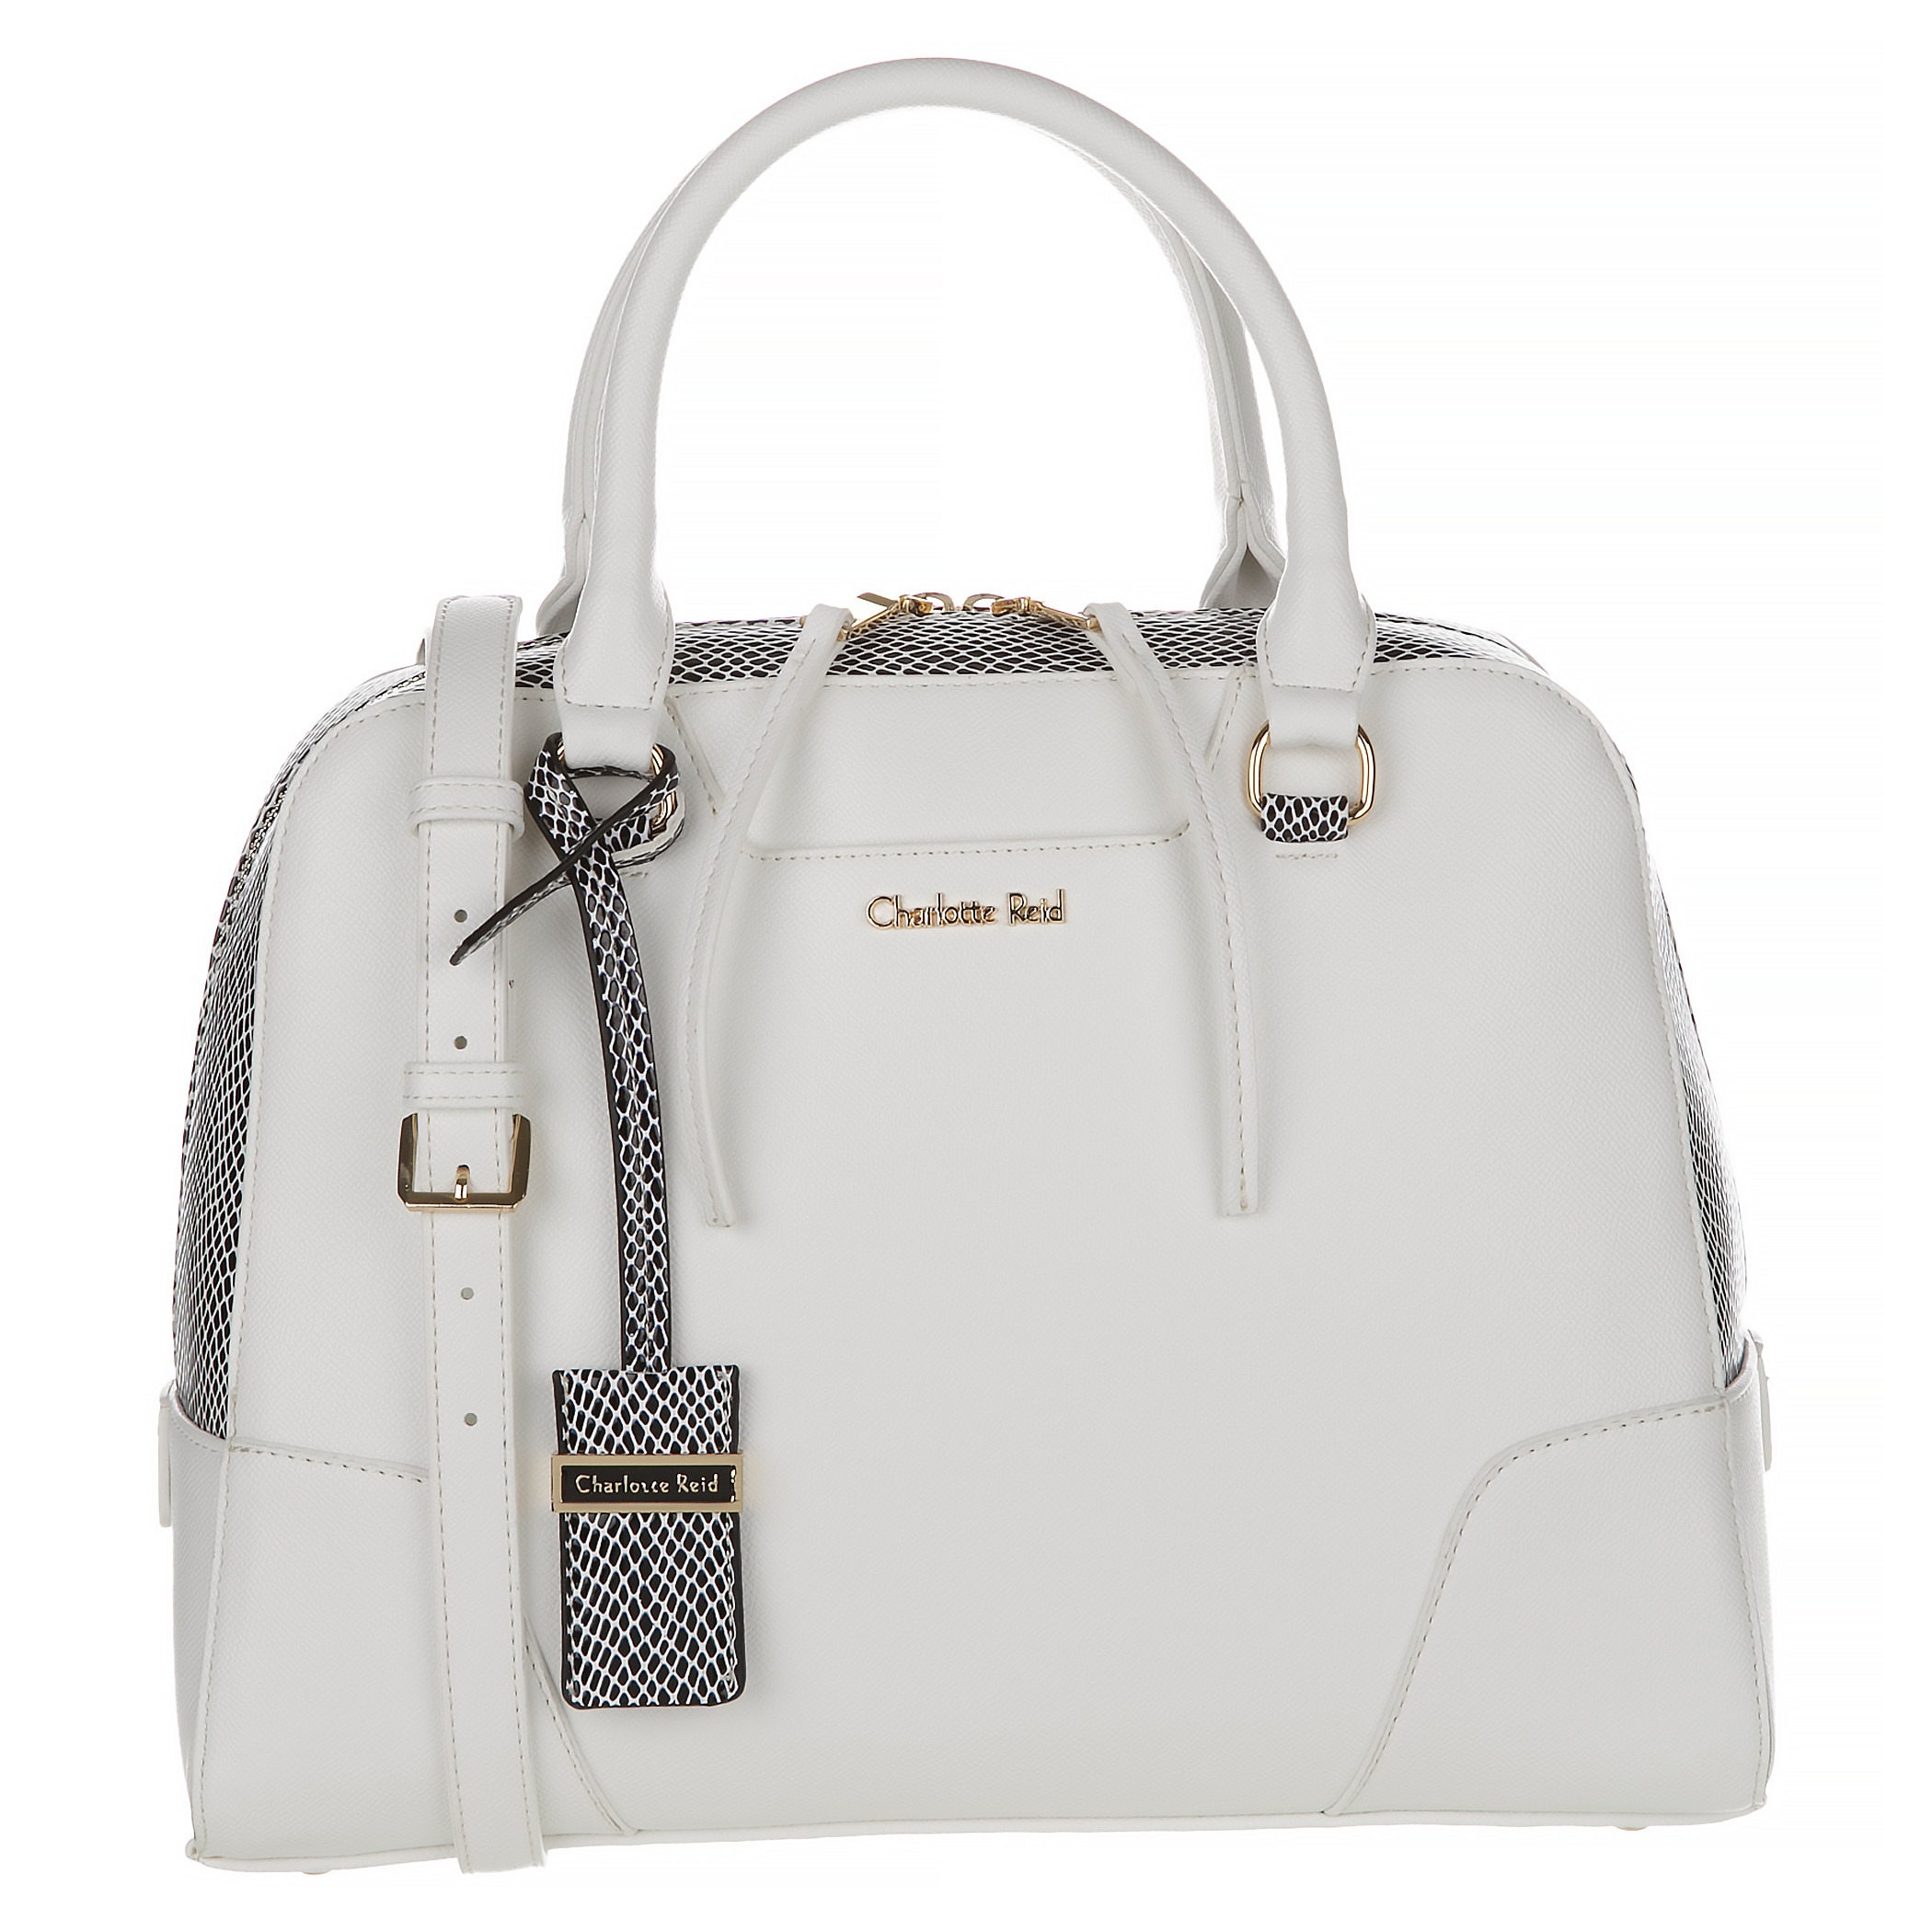 Buy Women's Charlotte Reid Embellished Tote Bag Online | Centrepoint UAE